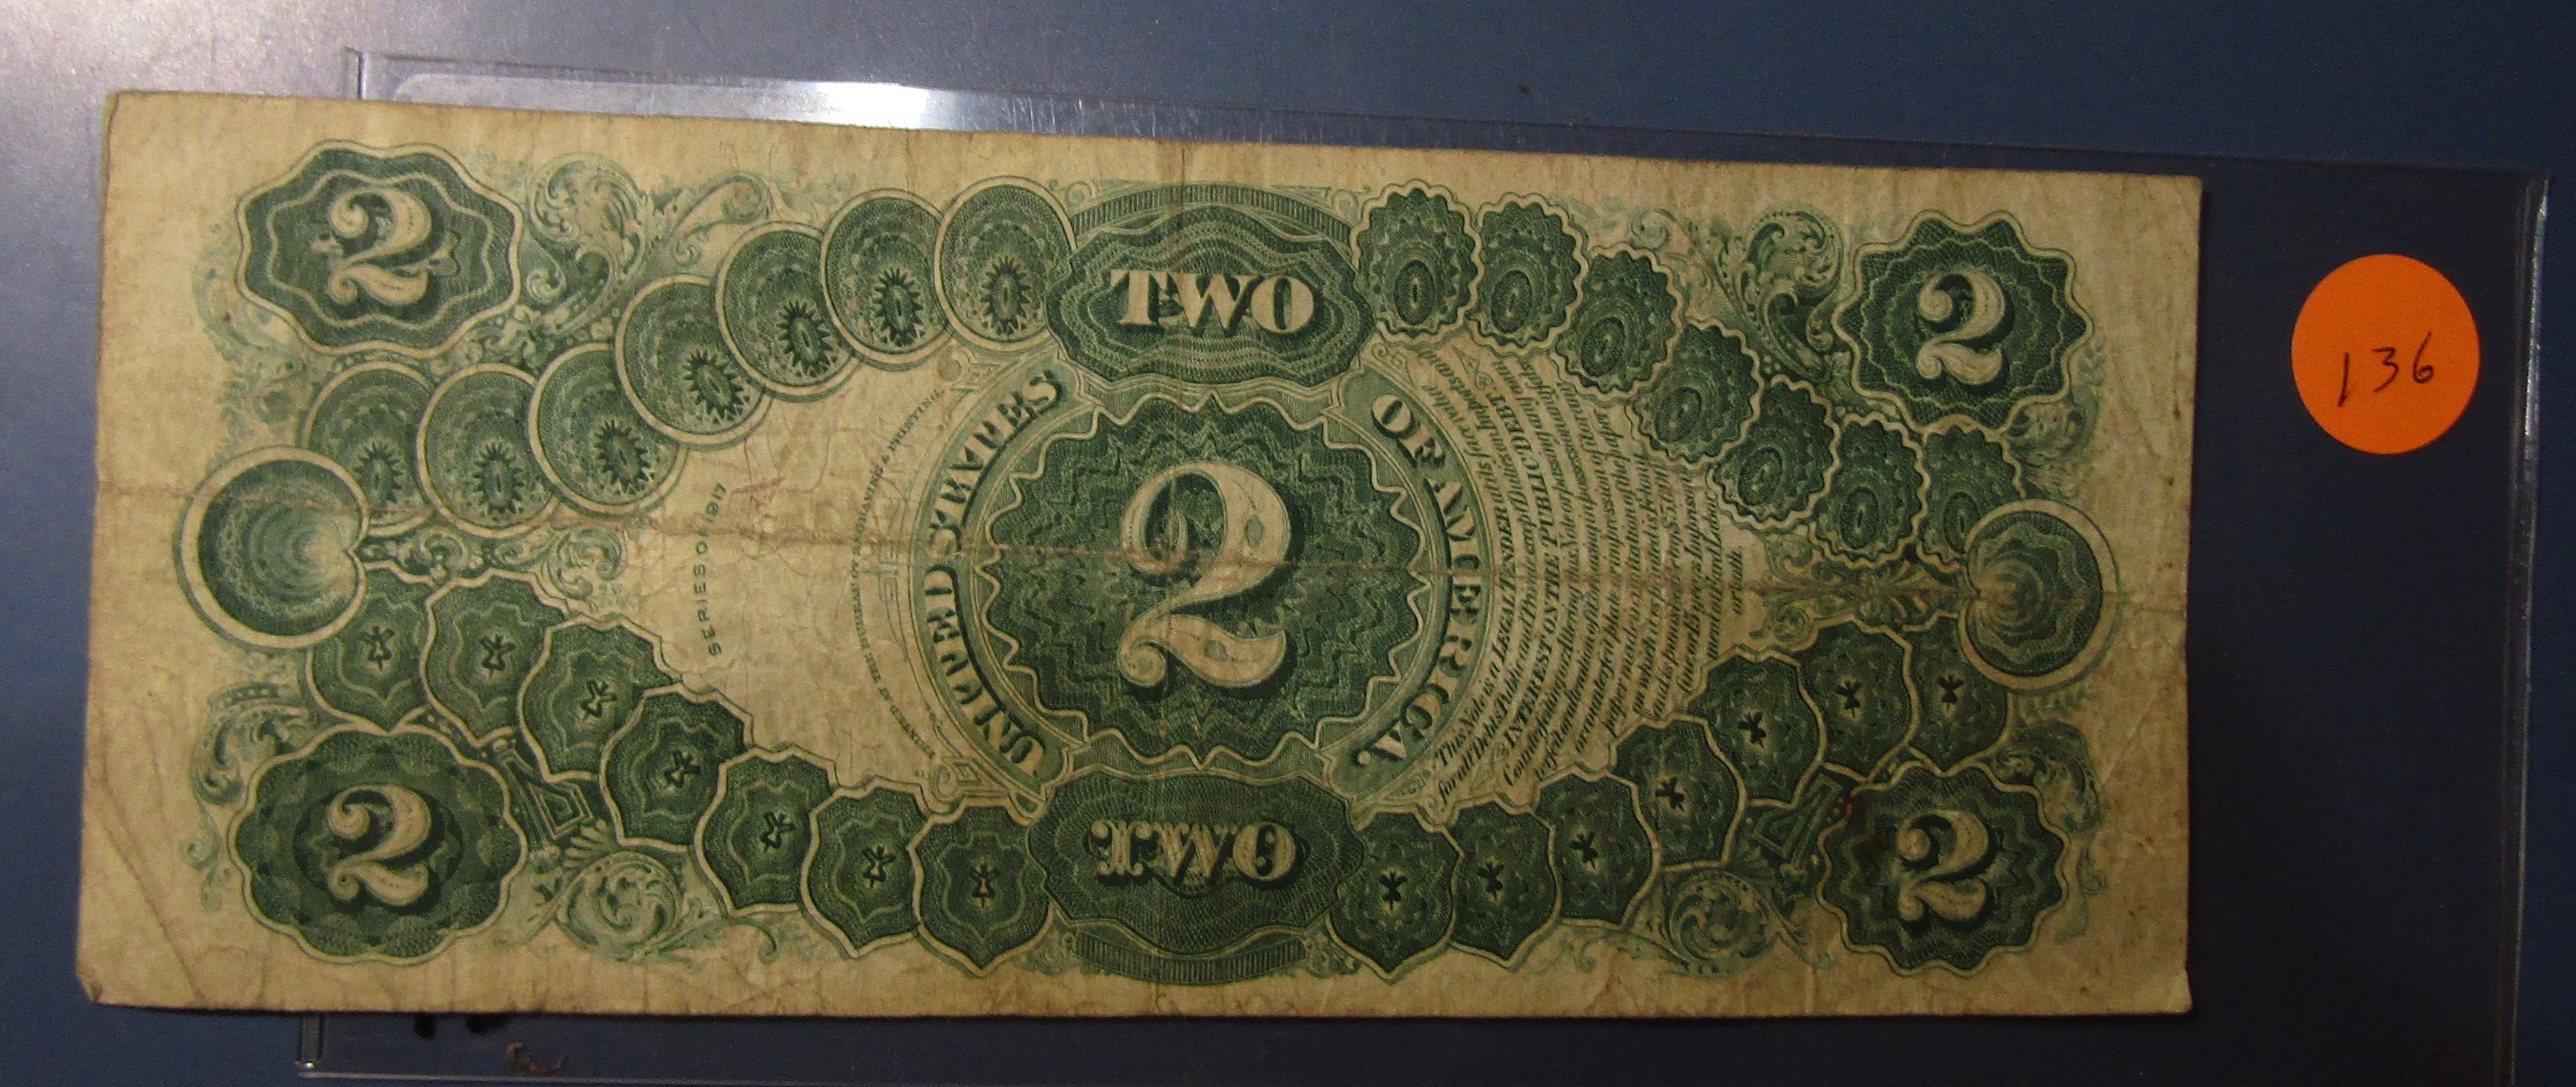 1917 $2.00 LEGAL TENDER NOTE FINE